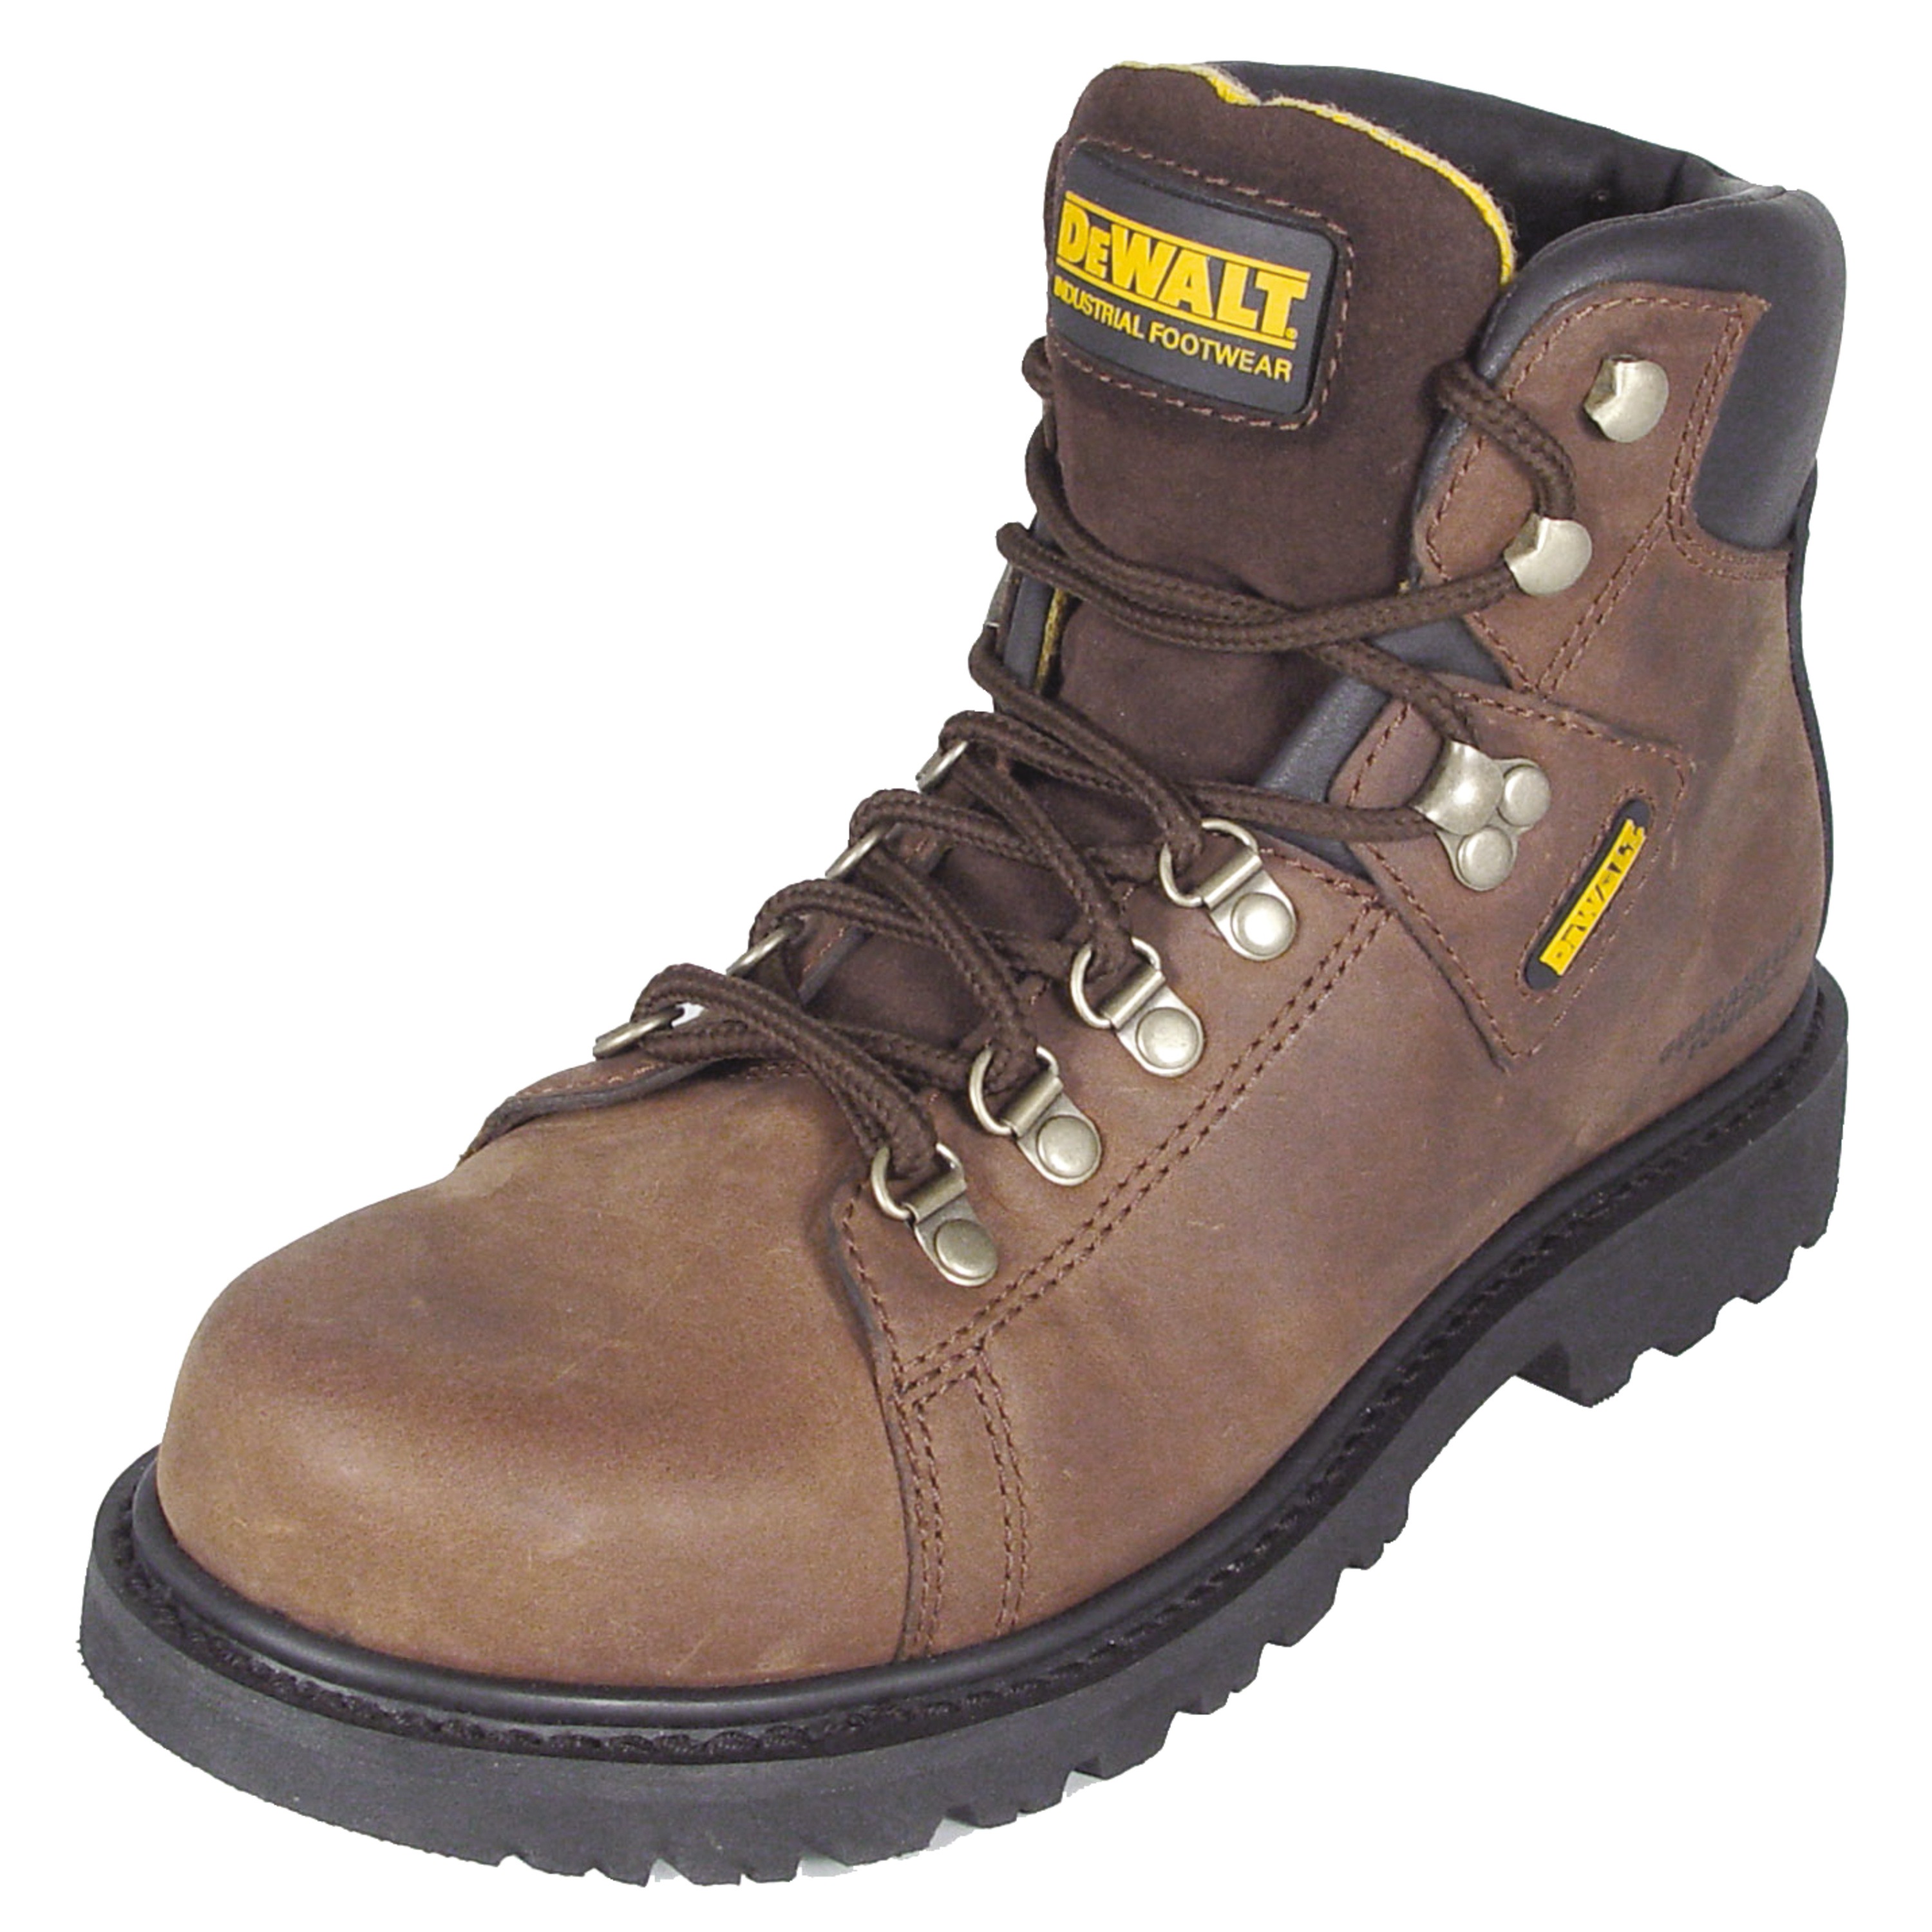 dewalt wide fit safety boots